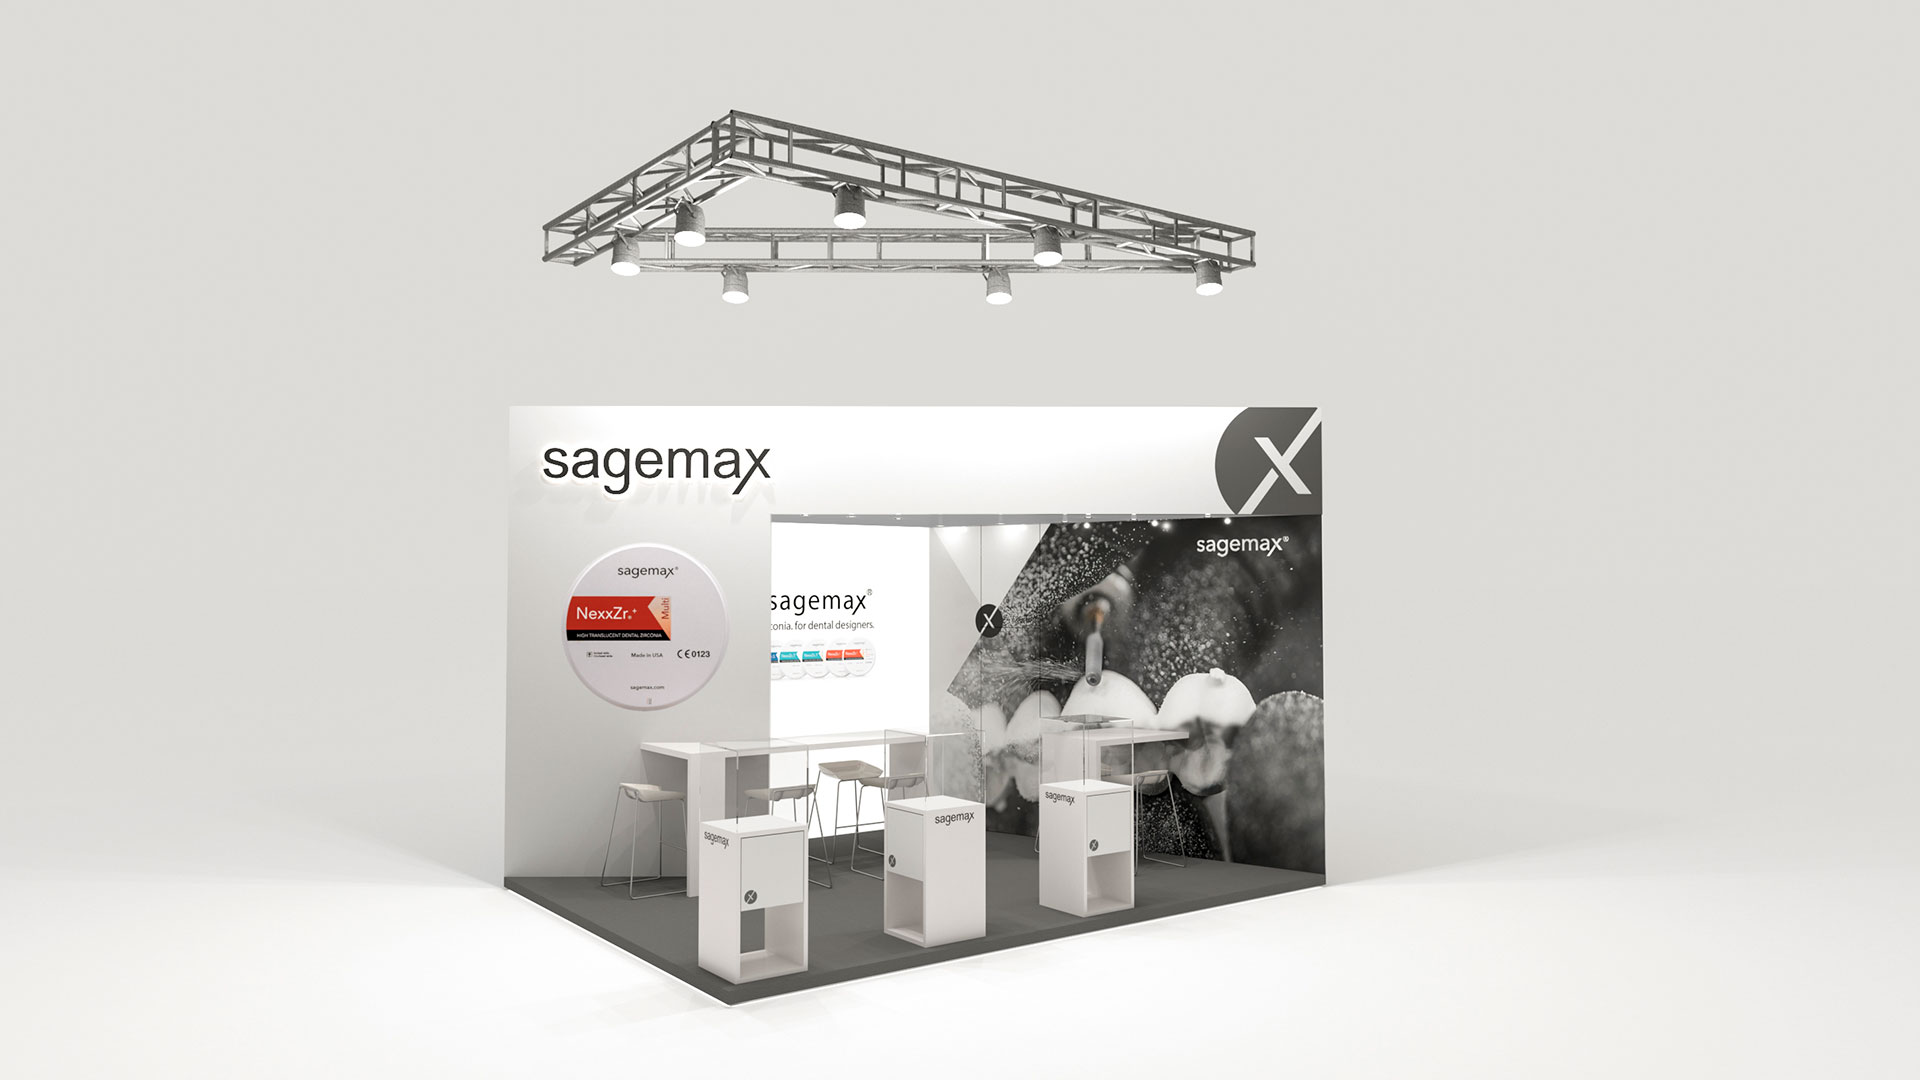 partners-360-sagemax-stand-espacios360